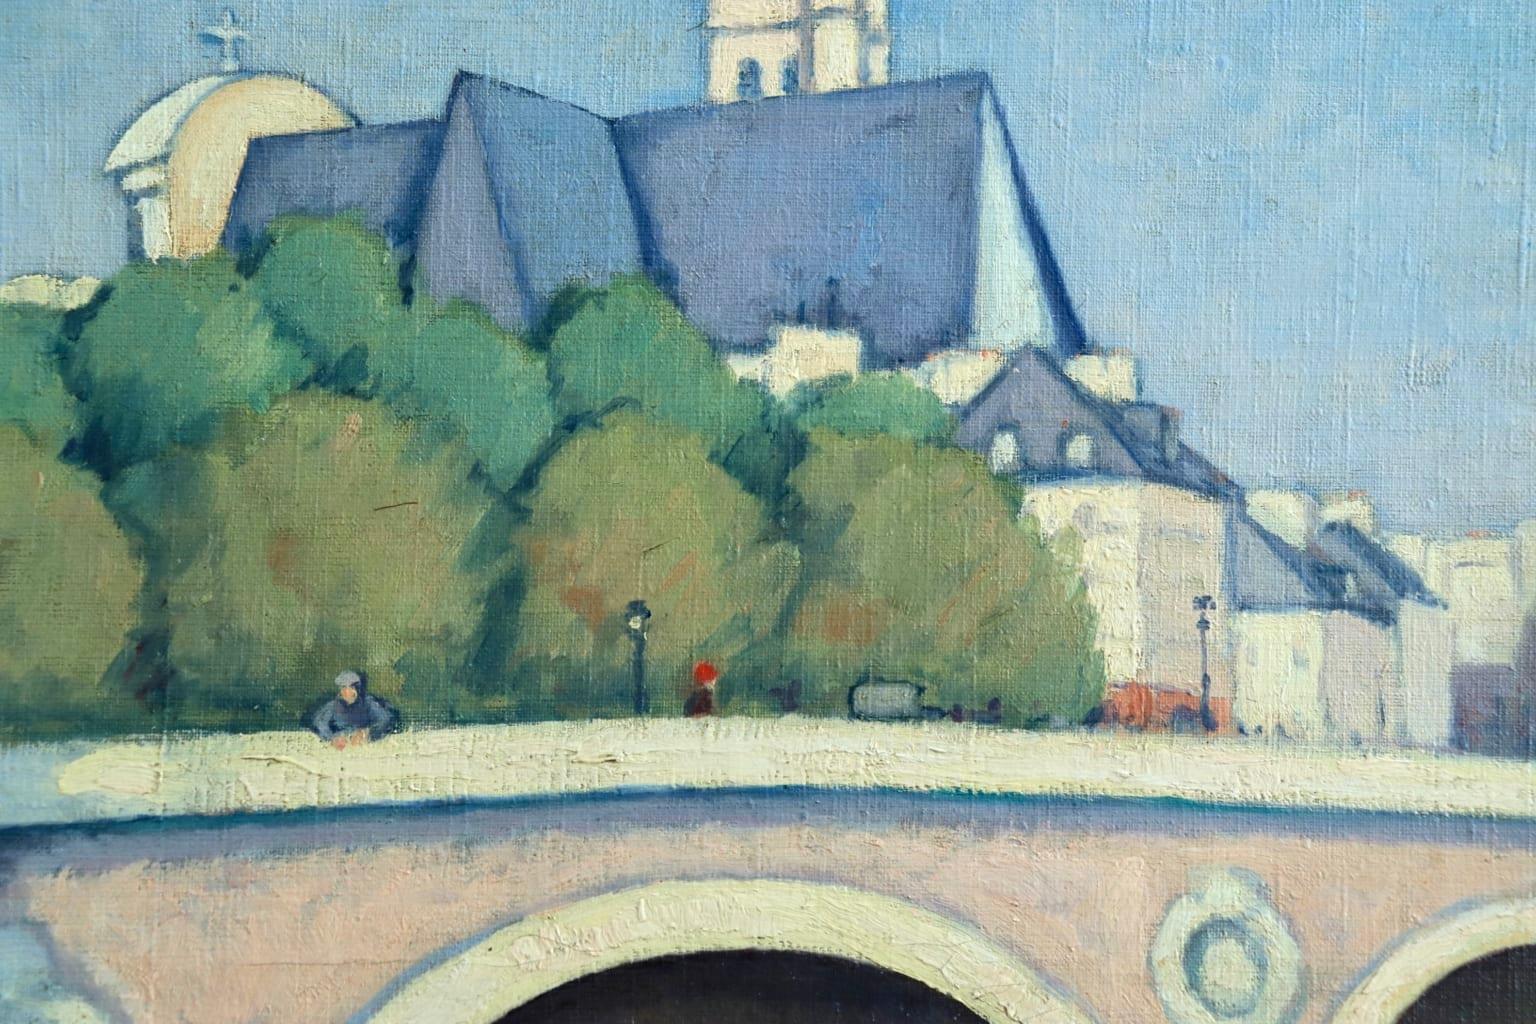 Pont Louis Philippe - Paris - Post Impressionist Oil, River Cityscape by C Kluge - Post-Impressionist Painting by Constantin Kluge